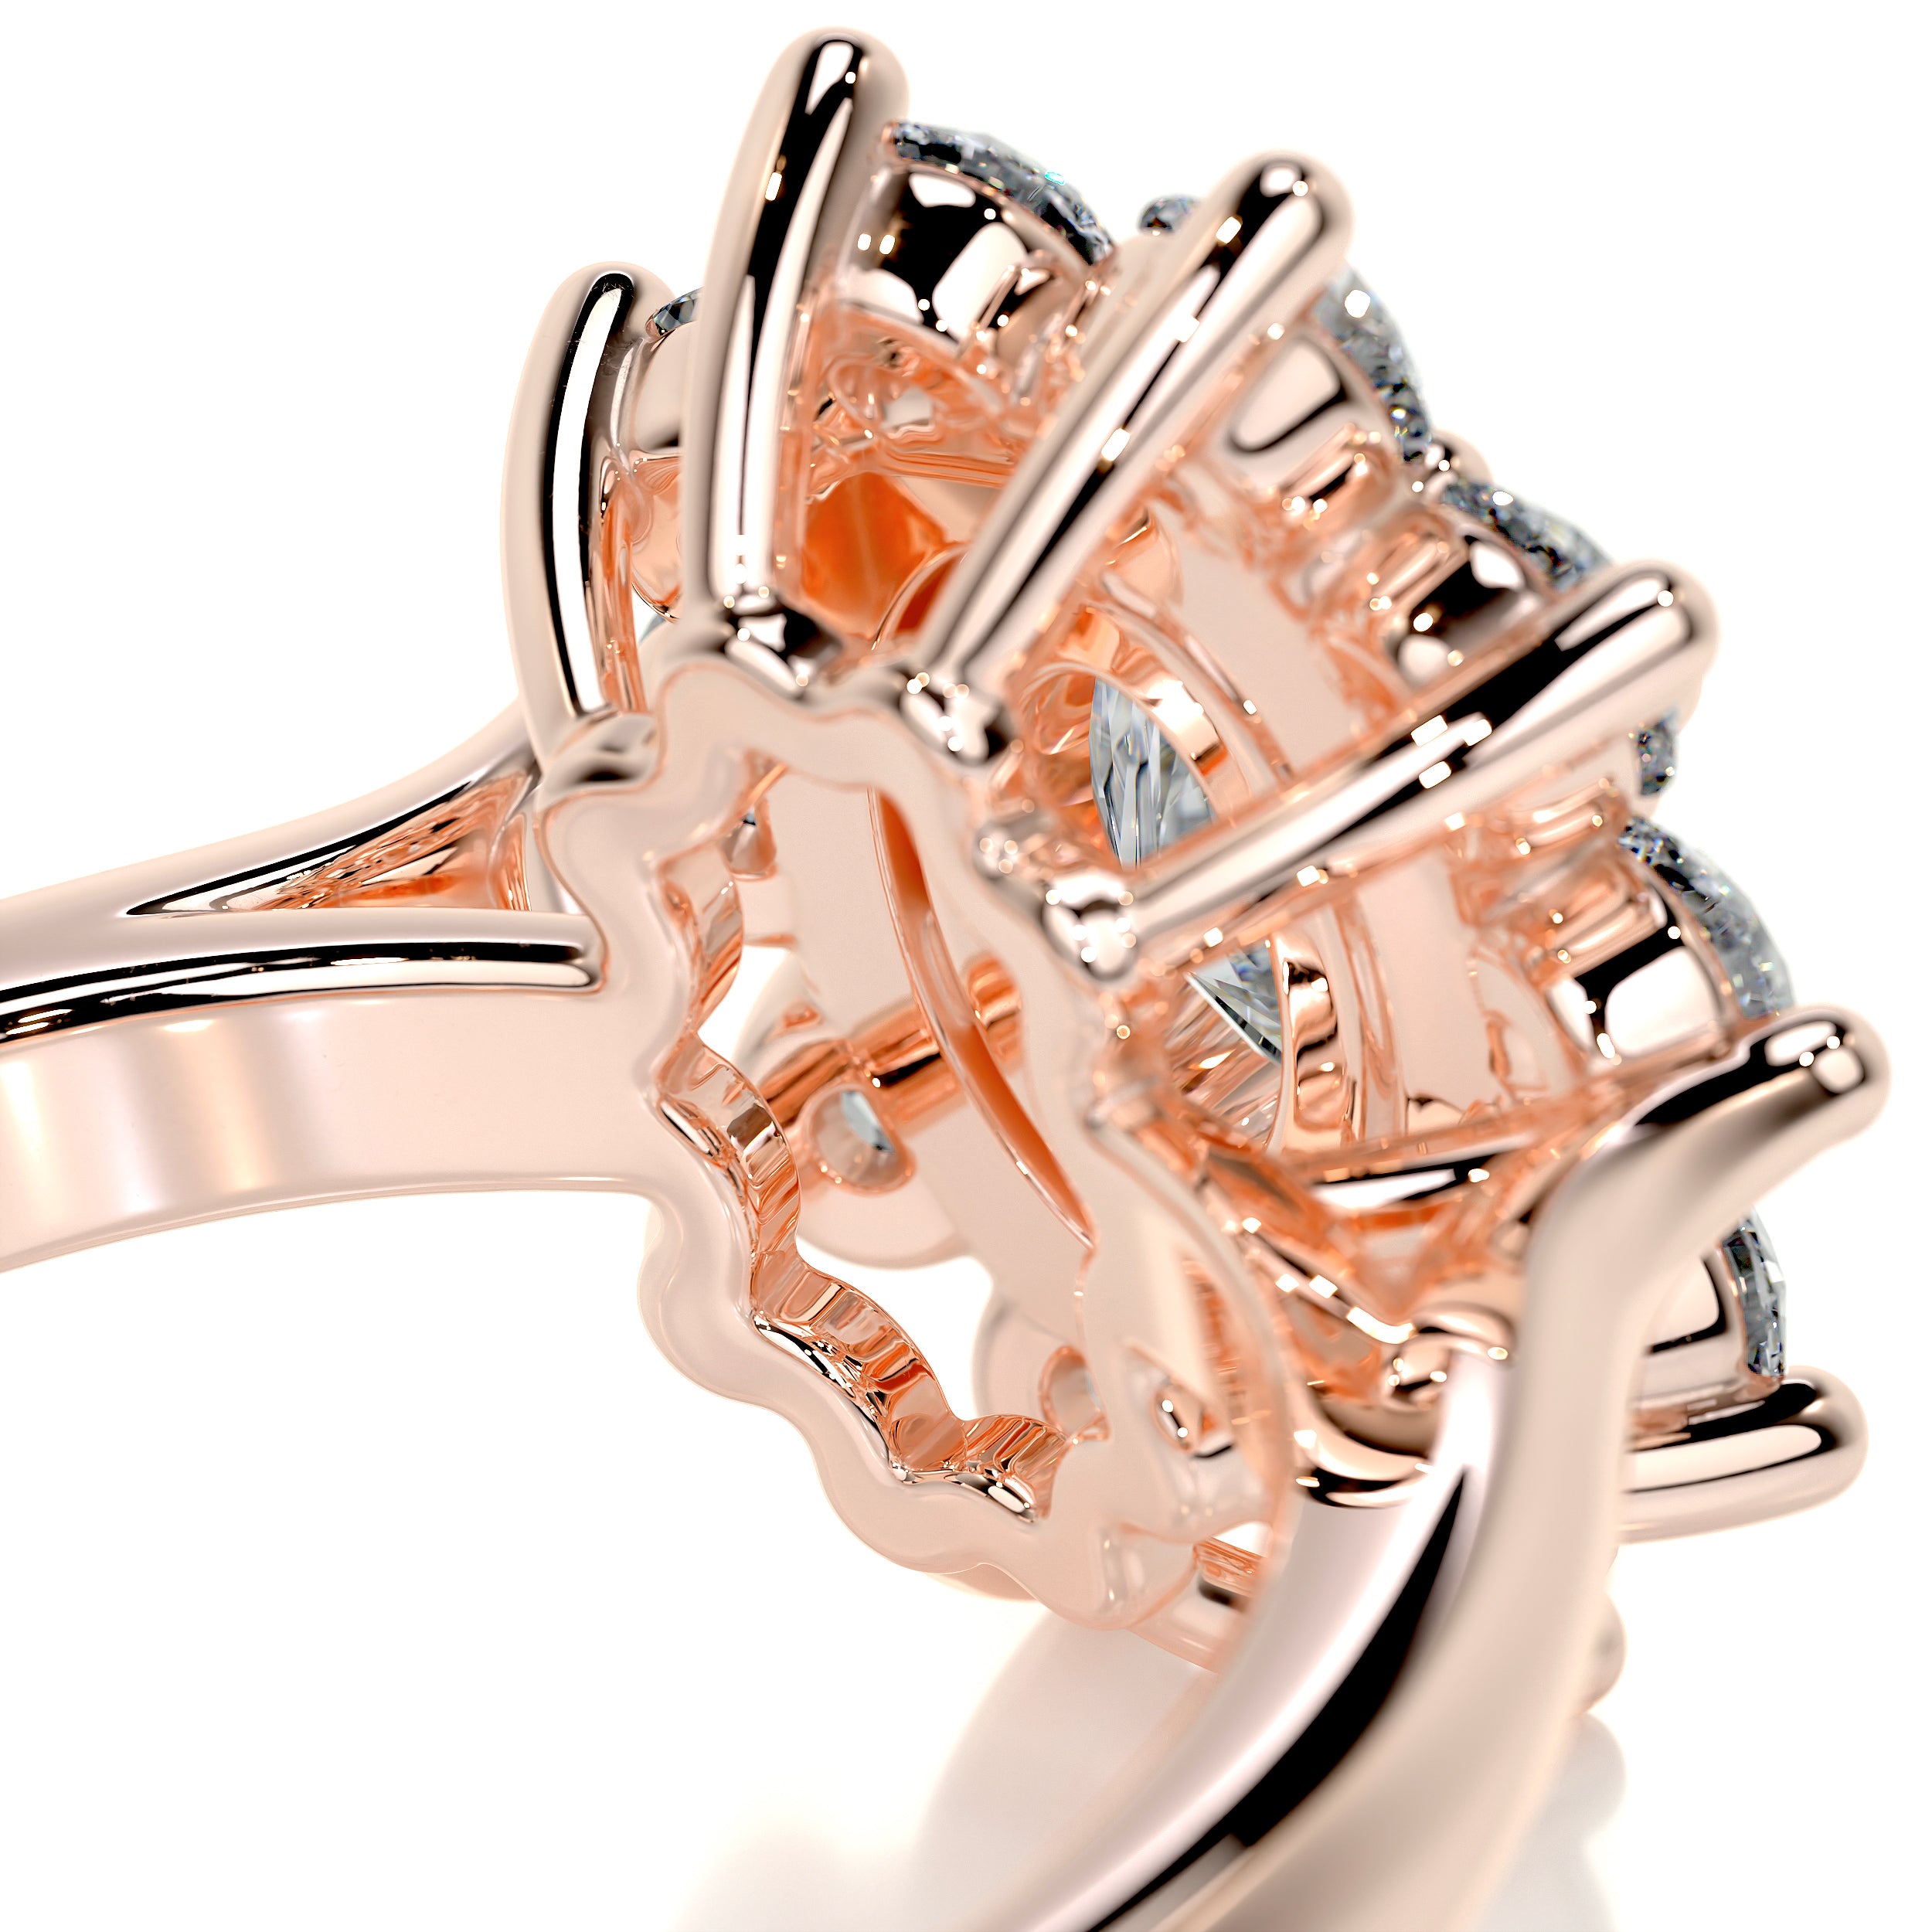 La Fleur Diamond Engagement Ring -14K Rose Gold